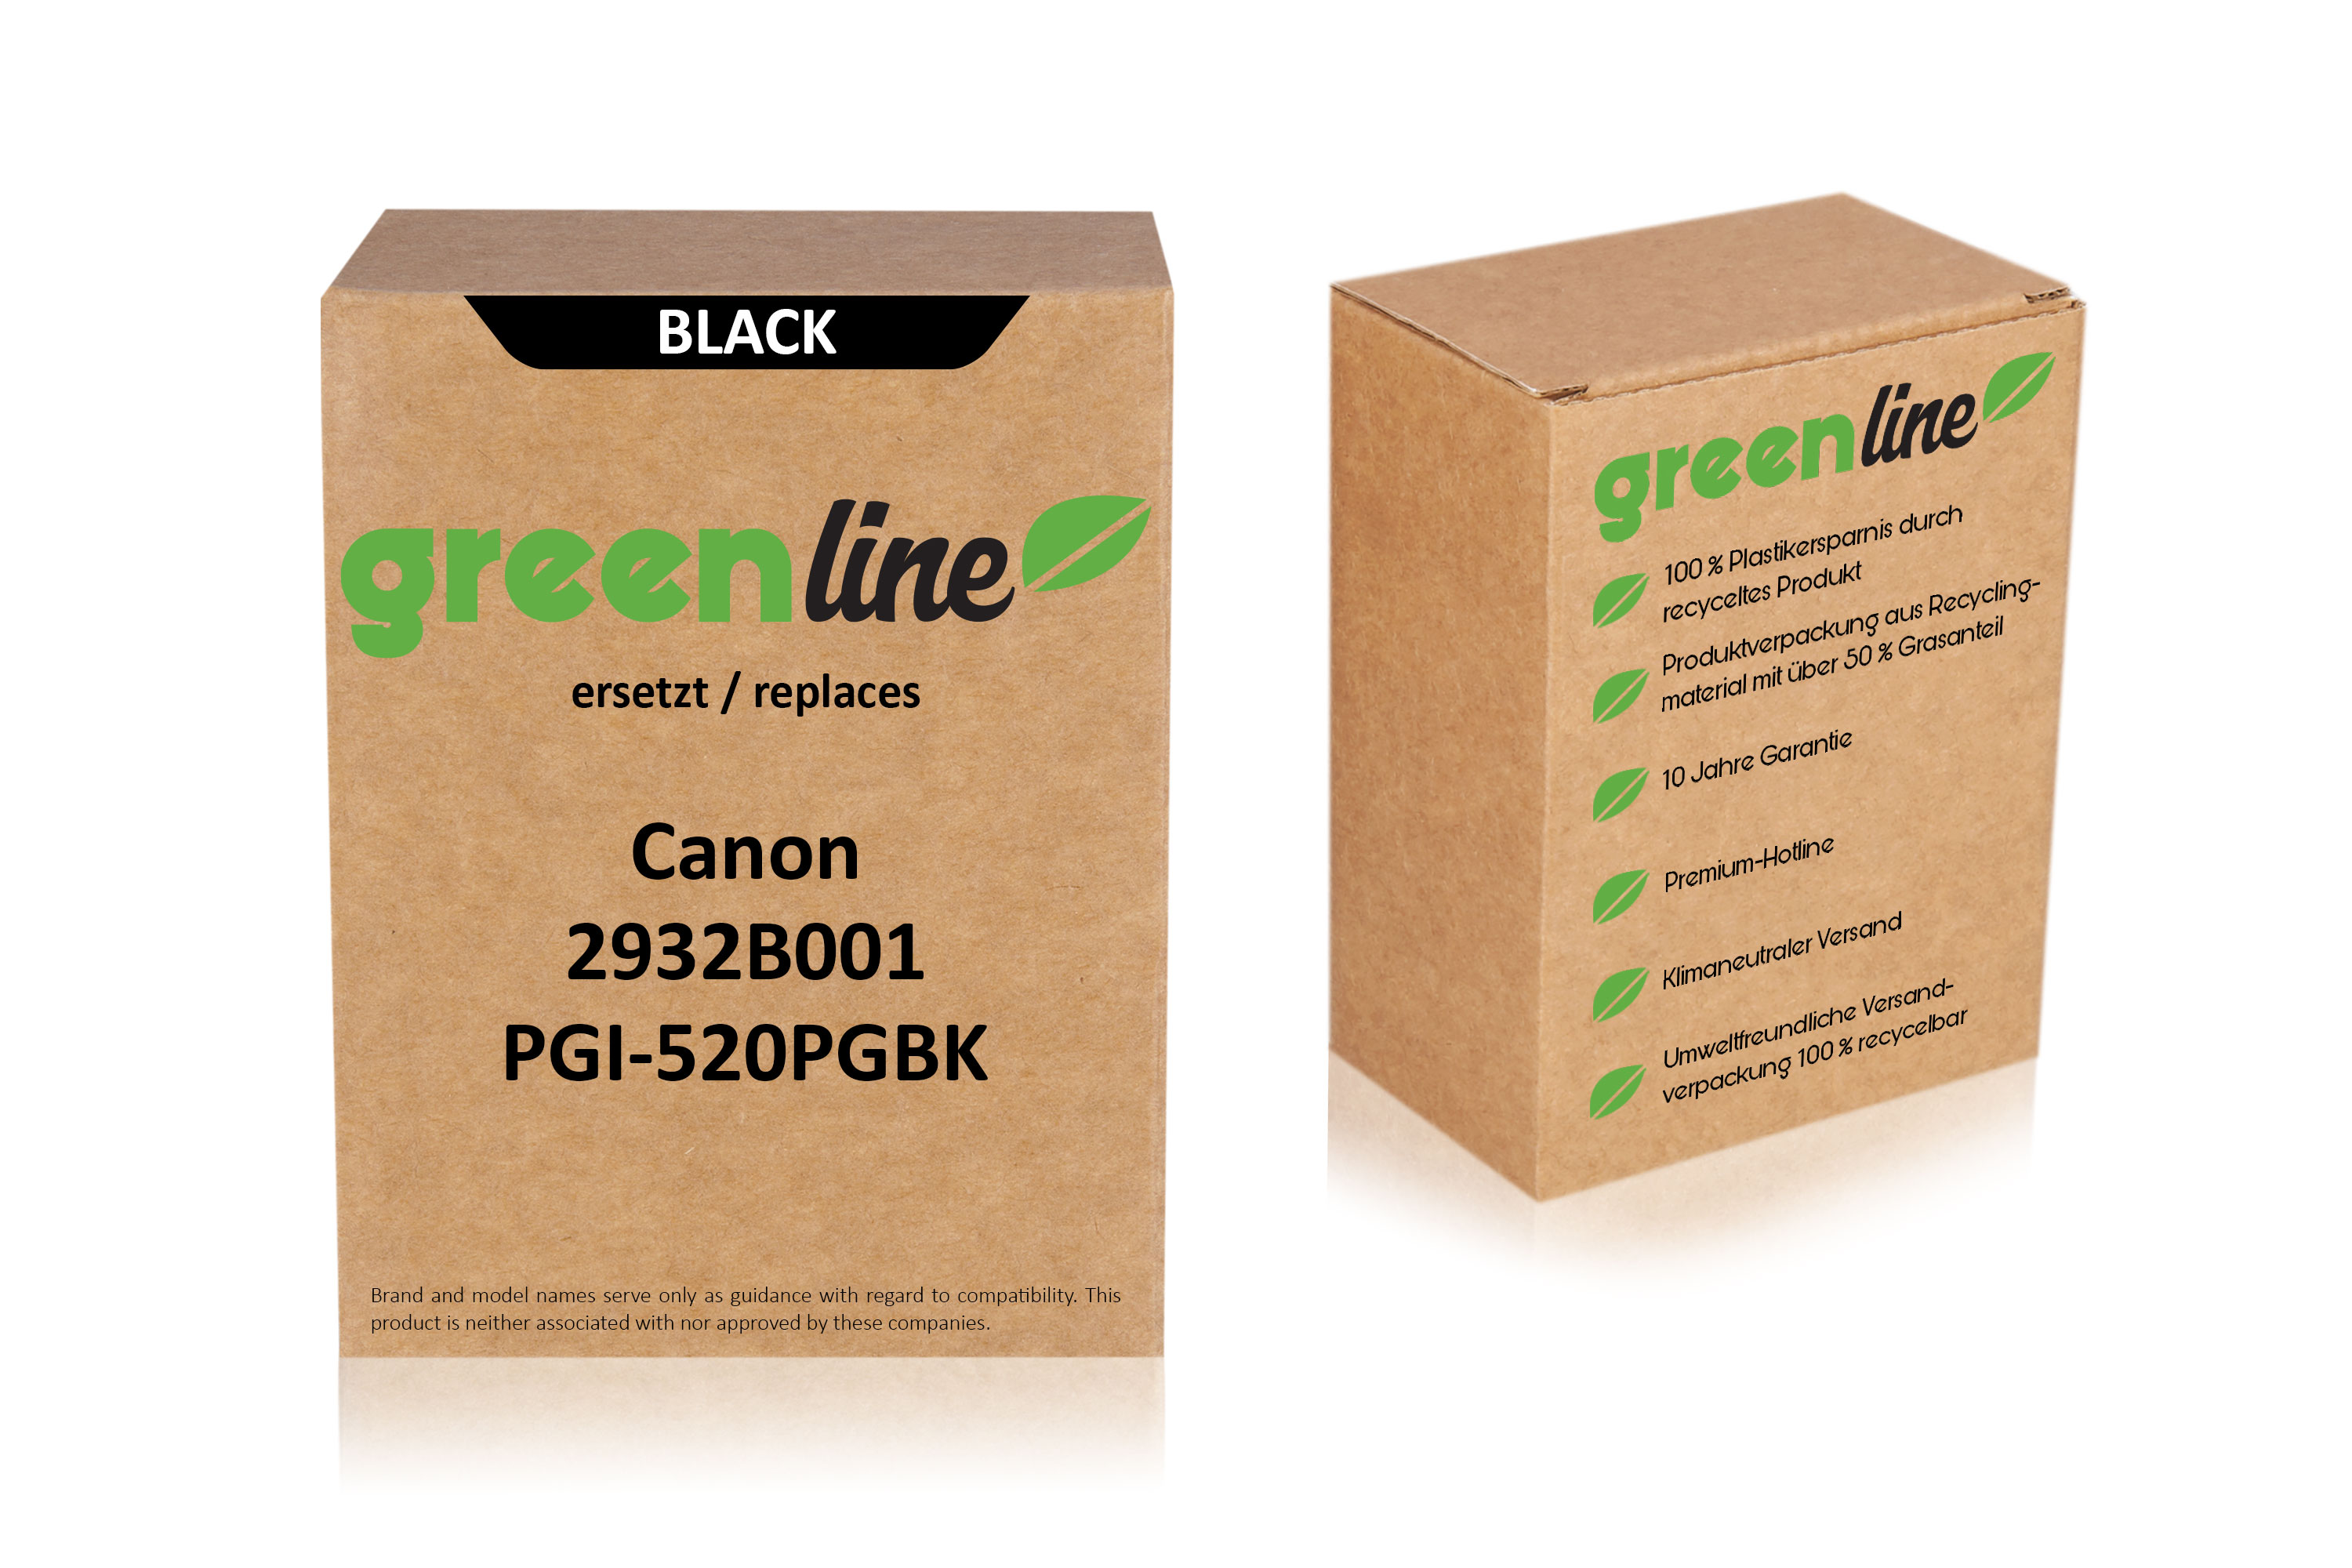 greenline ersetzt Canon 2932B001 / PGI-520 PGBK Tintenpatrone, schwarz